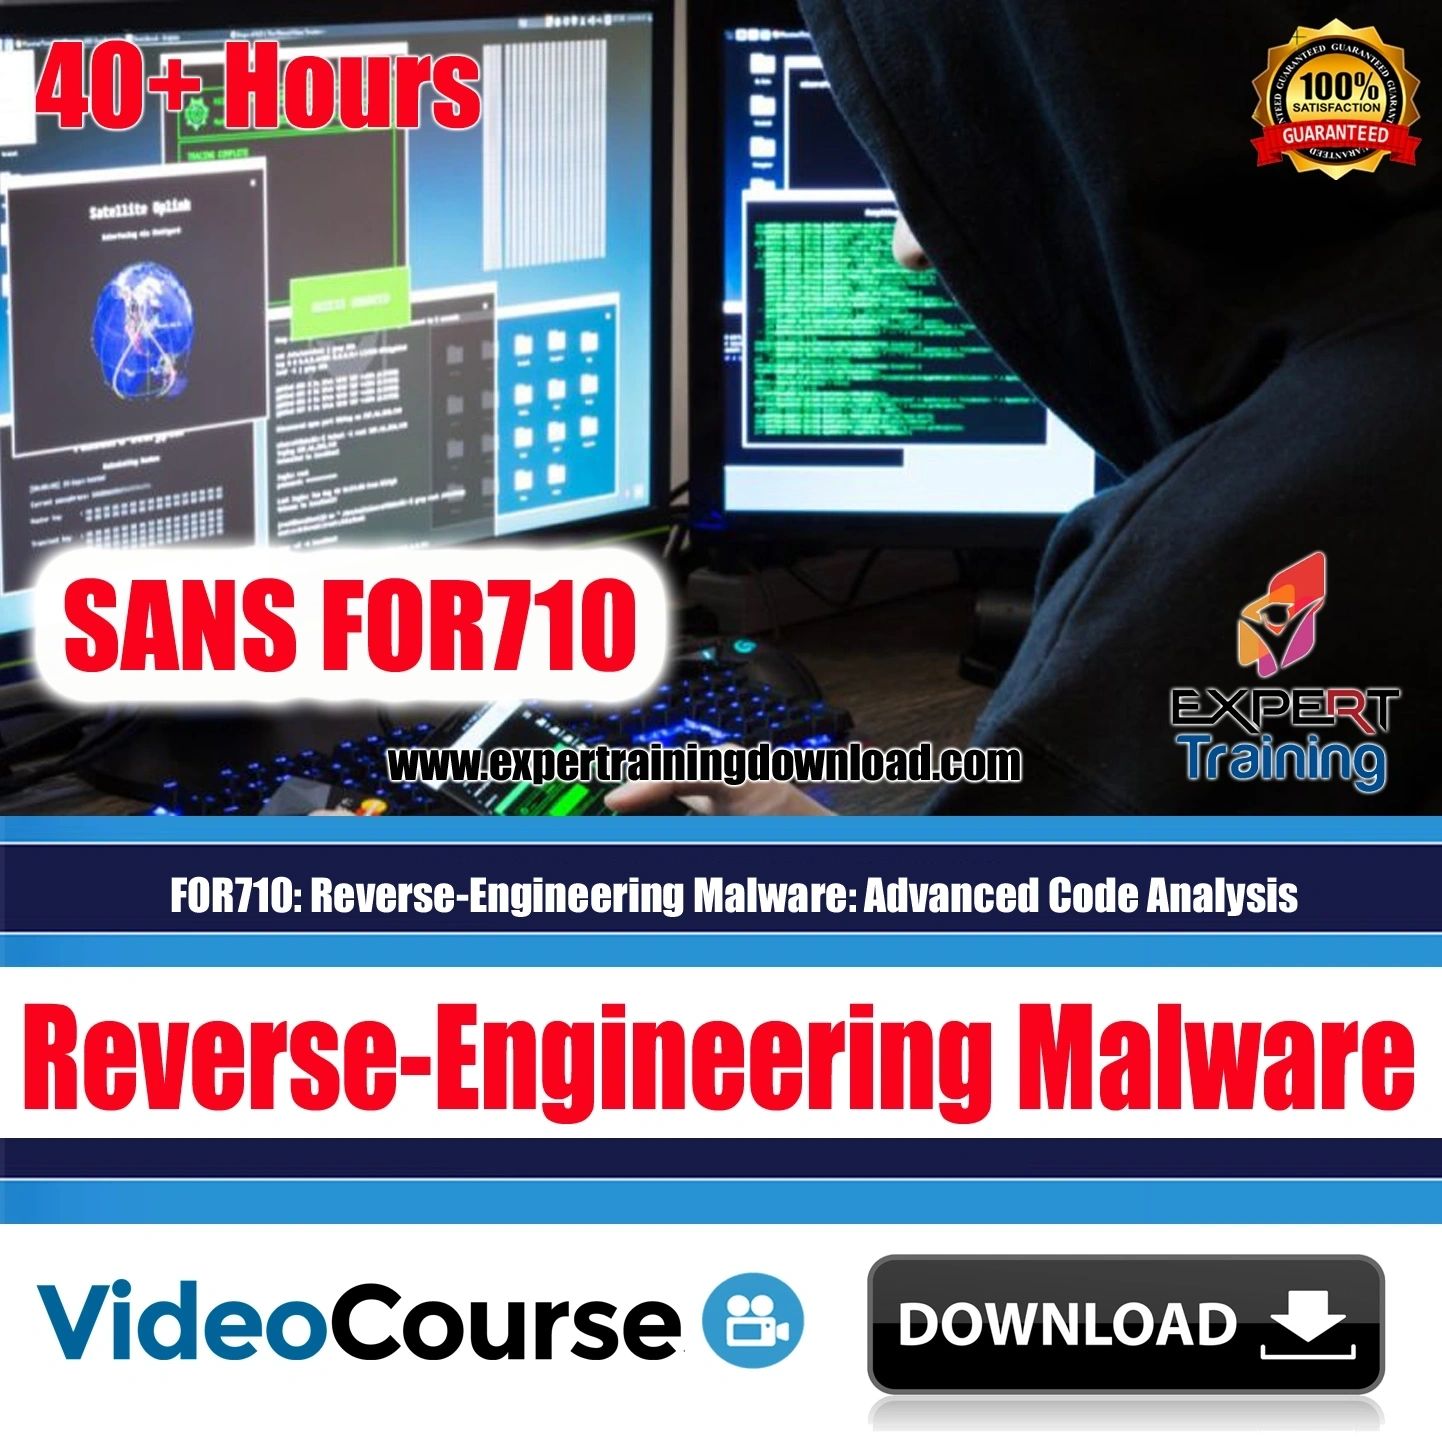 FOR710 Reverse-Engineering Malware Advanced Code Analysis (VOD, PDF, USB)